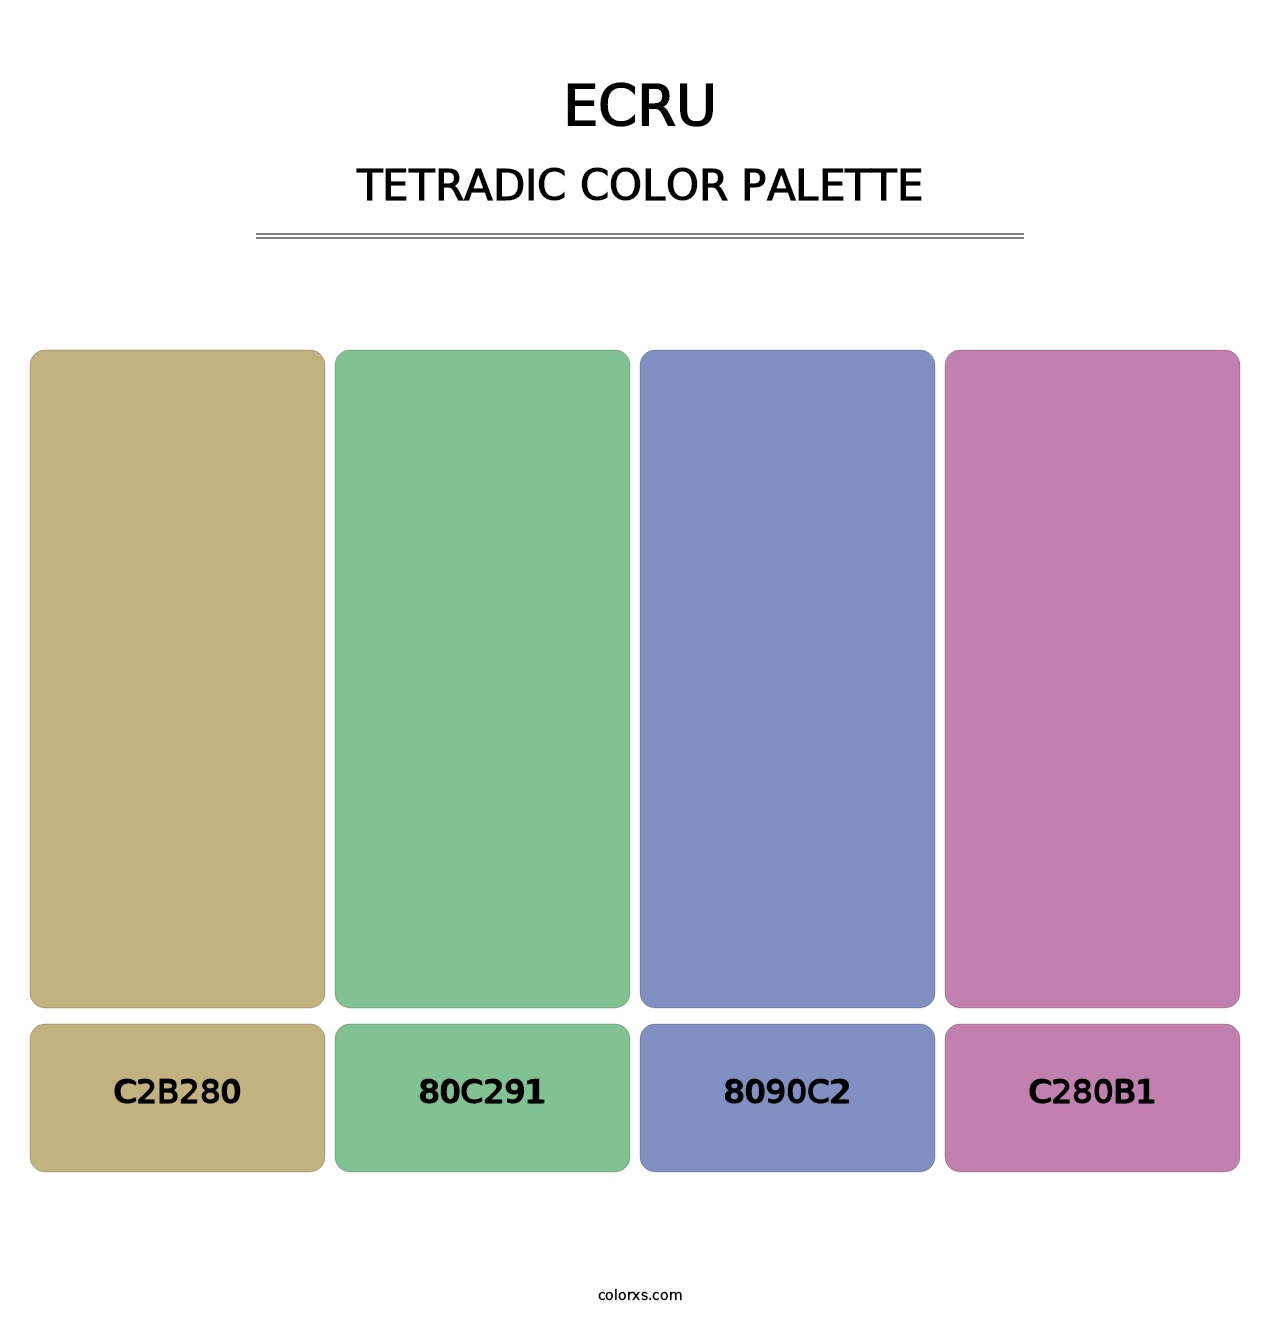 Ecru - Tetradic Color Palette